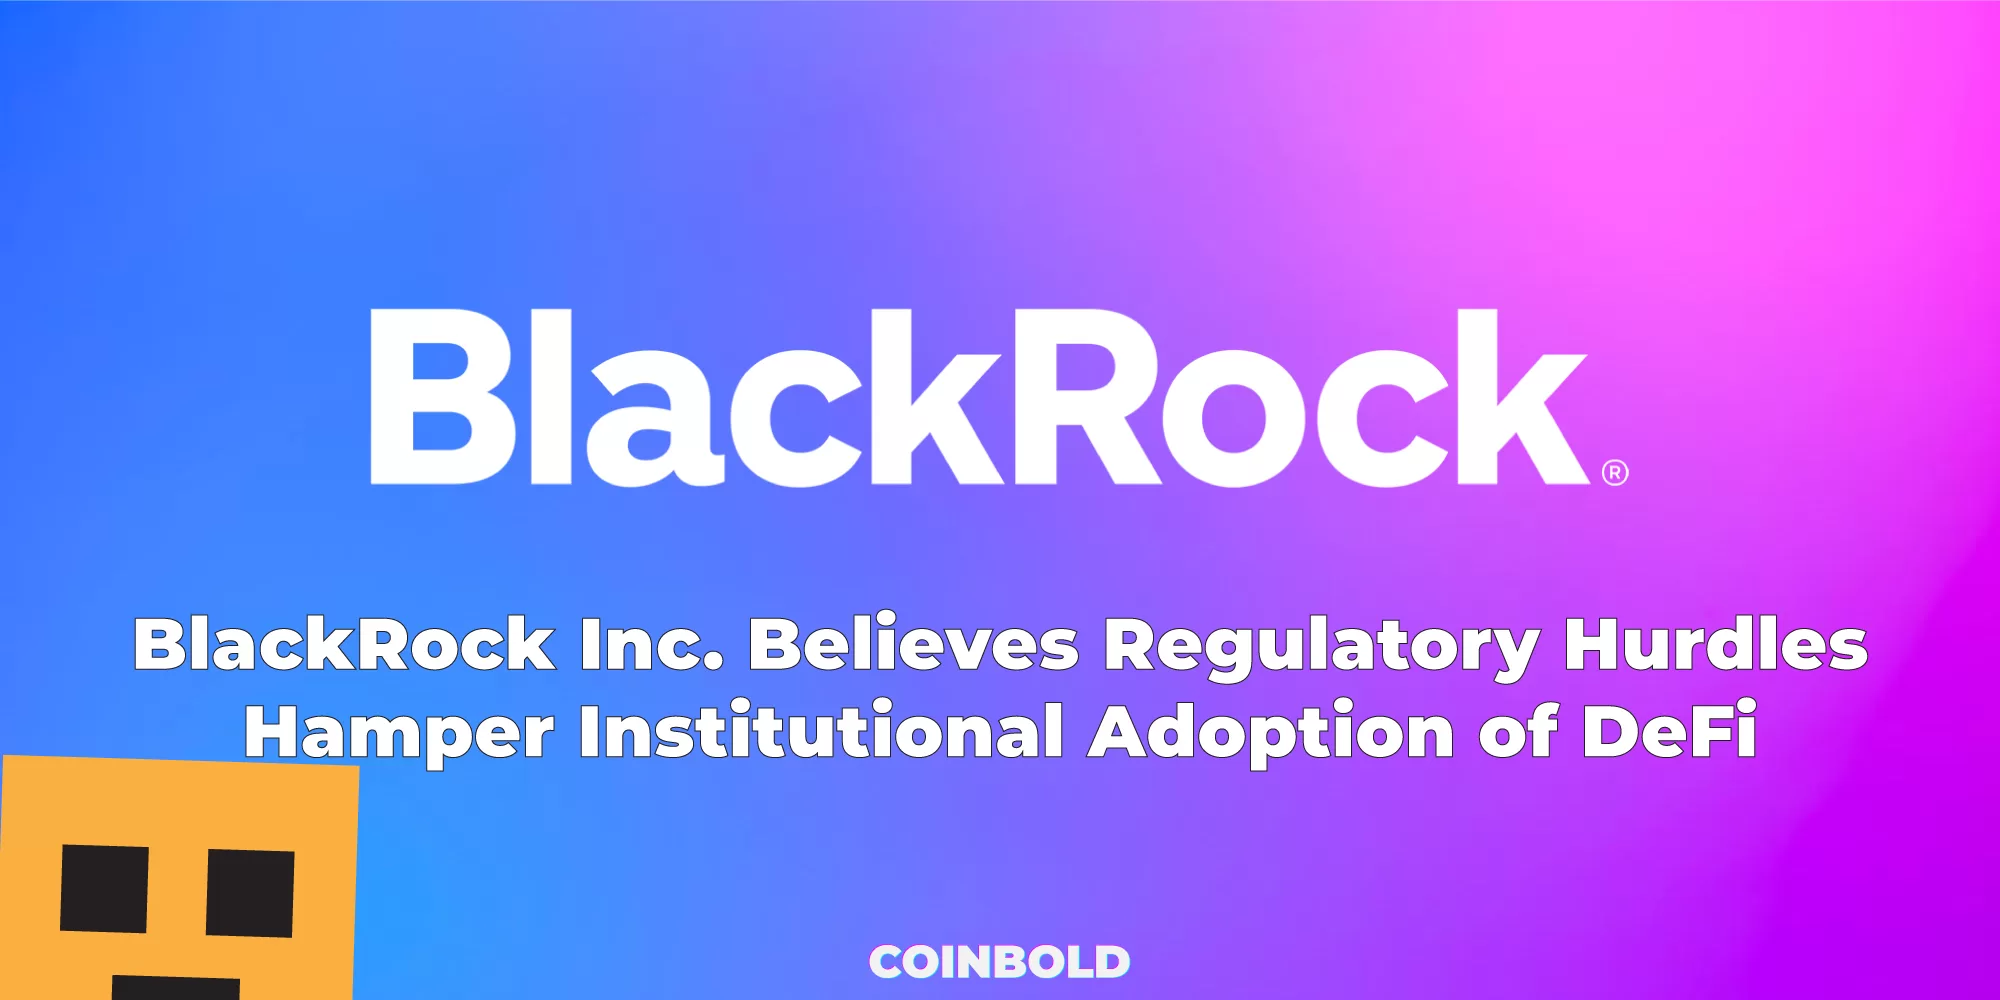 BlackRock Inc. Believes Regulatory Hurdles Hamper Institutional Adoption of DeFi